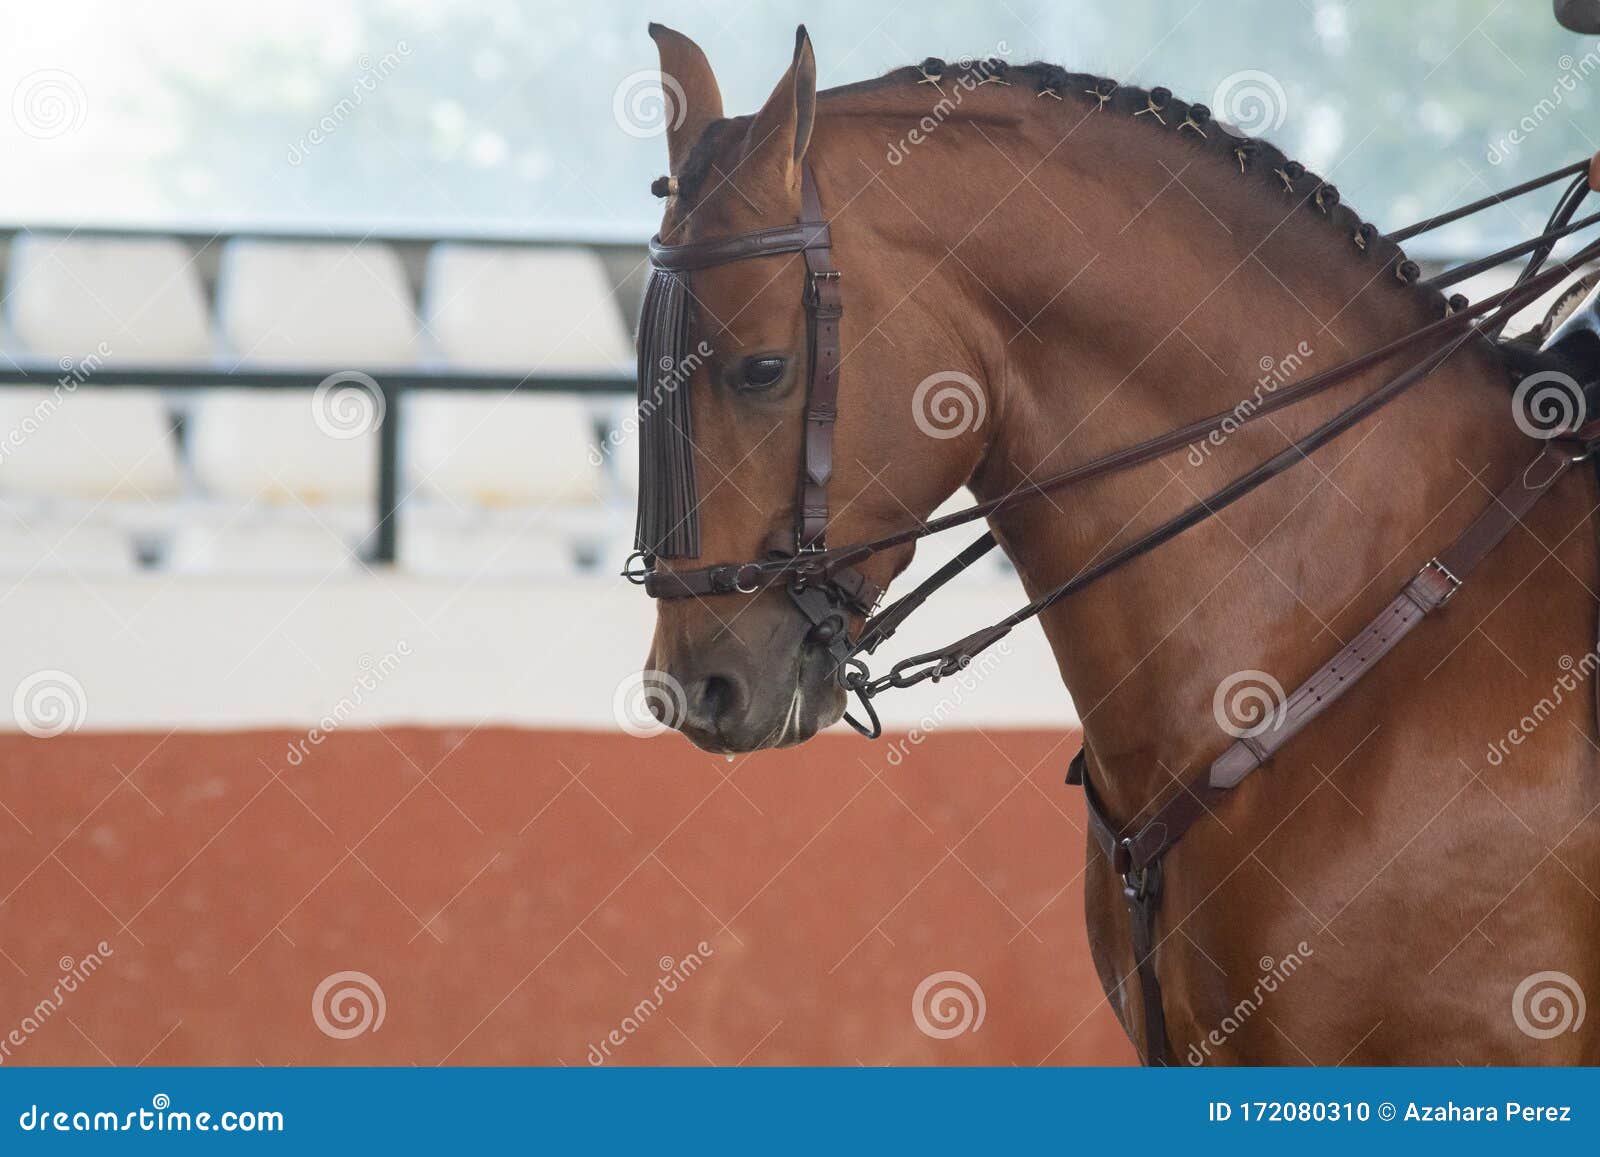 portrait of the head of a hispano arabian horse in doma vaquera